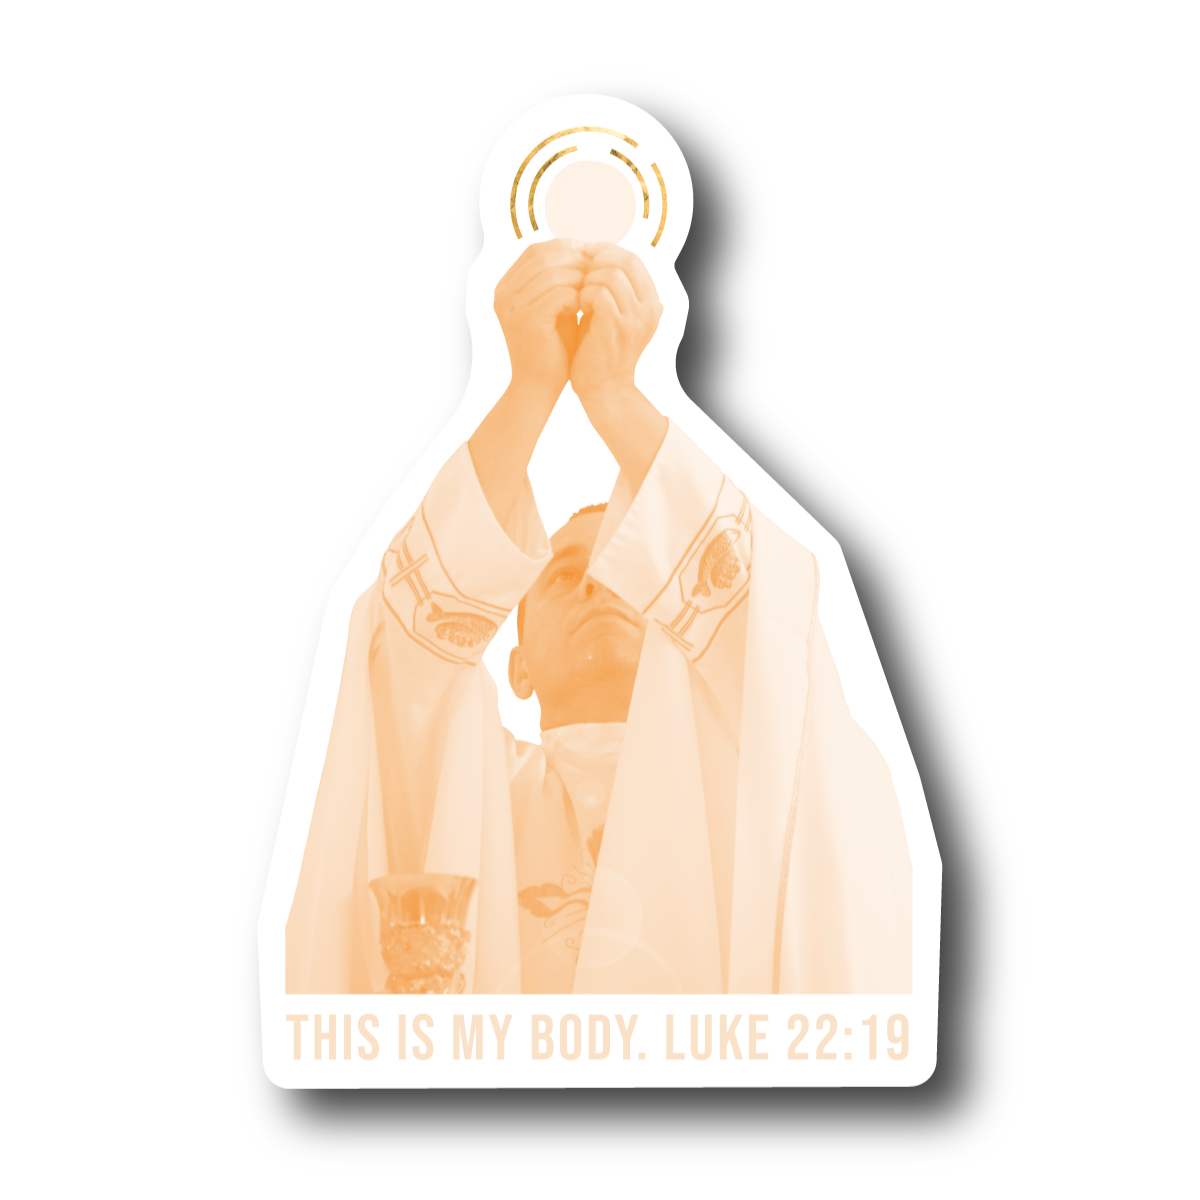 This is My Body, Priest - Luke 22:19 Sticker 10-pack